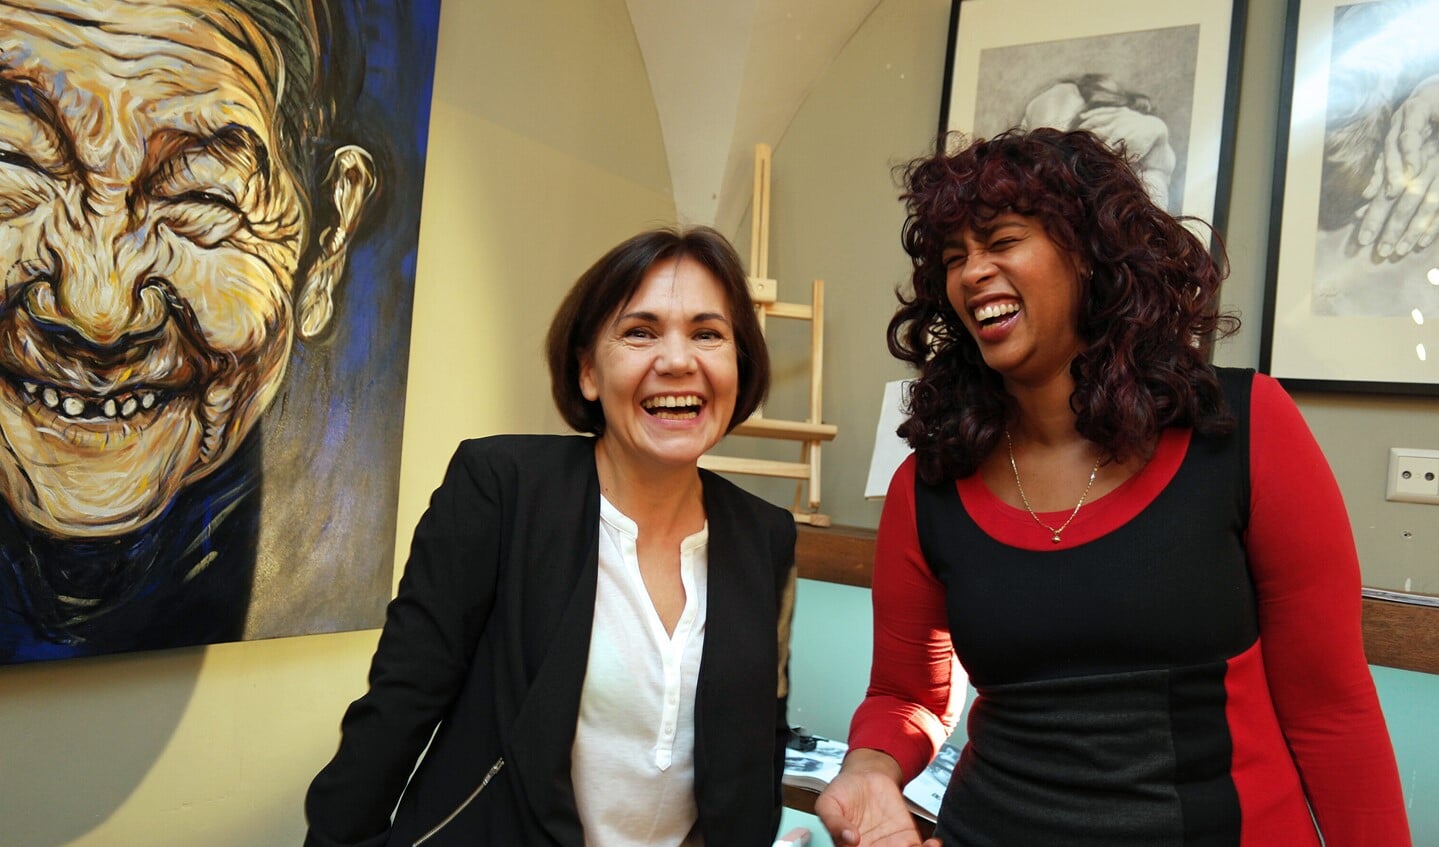 Kunstenares Joanna Smolarz met Sandra Stakel